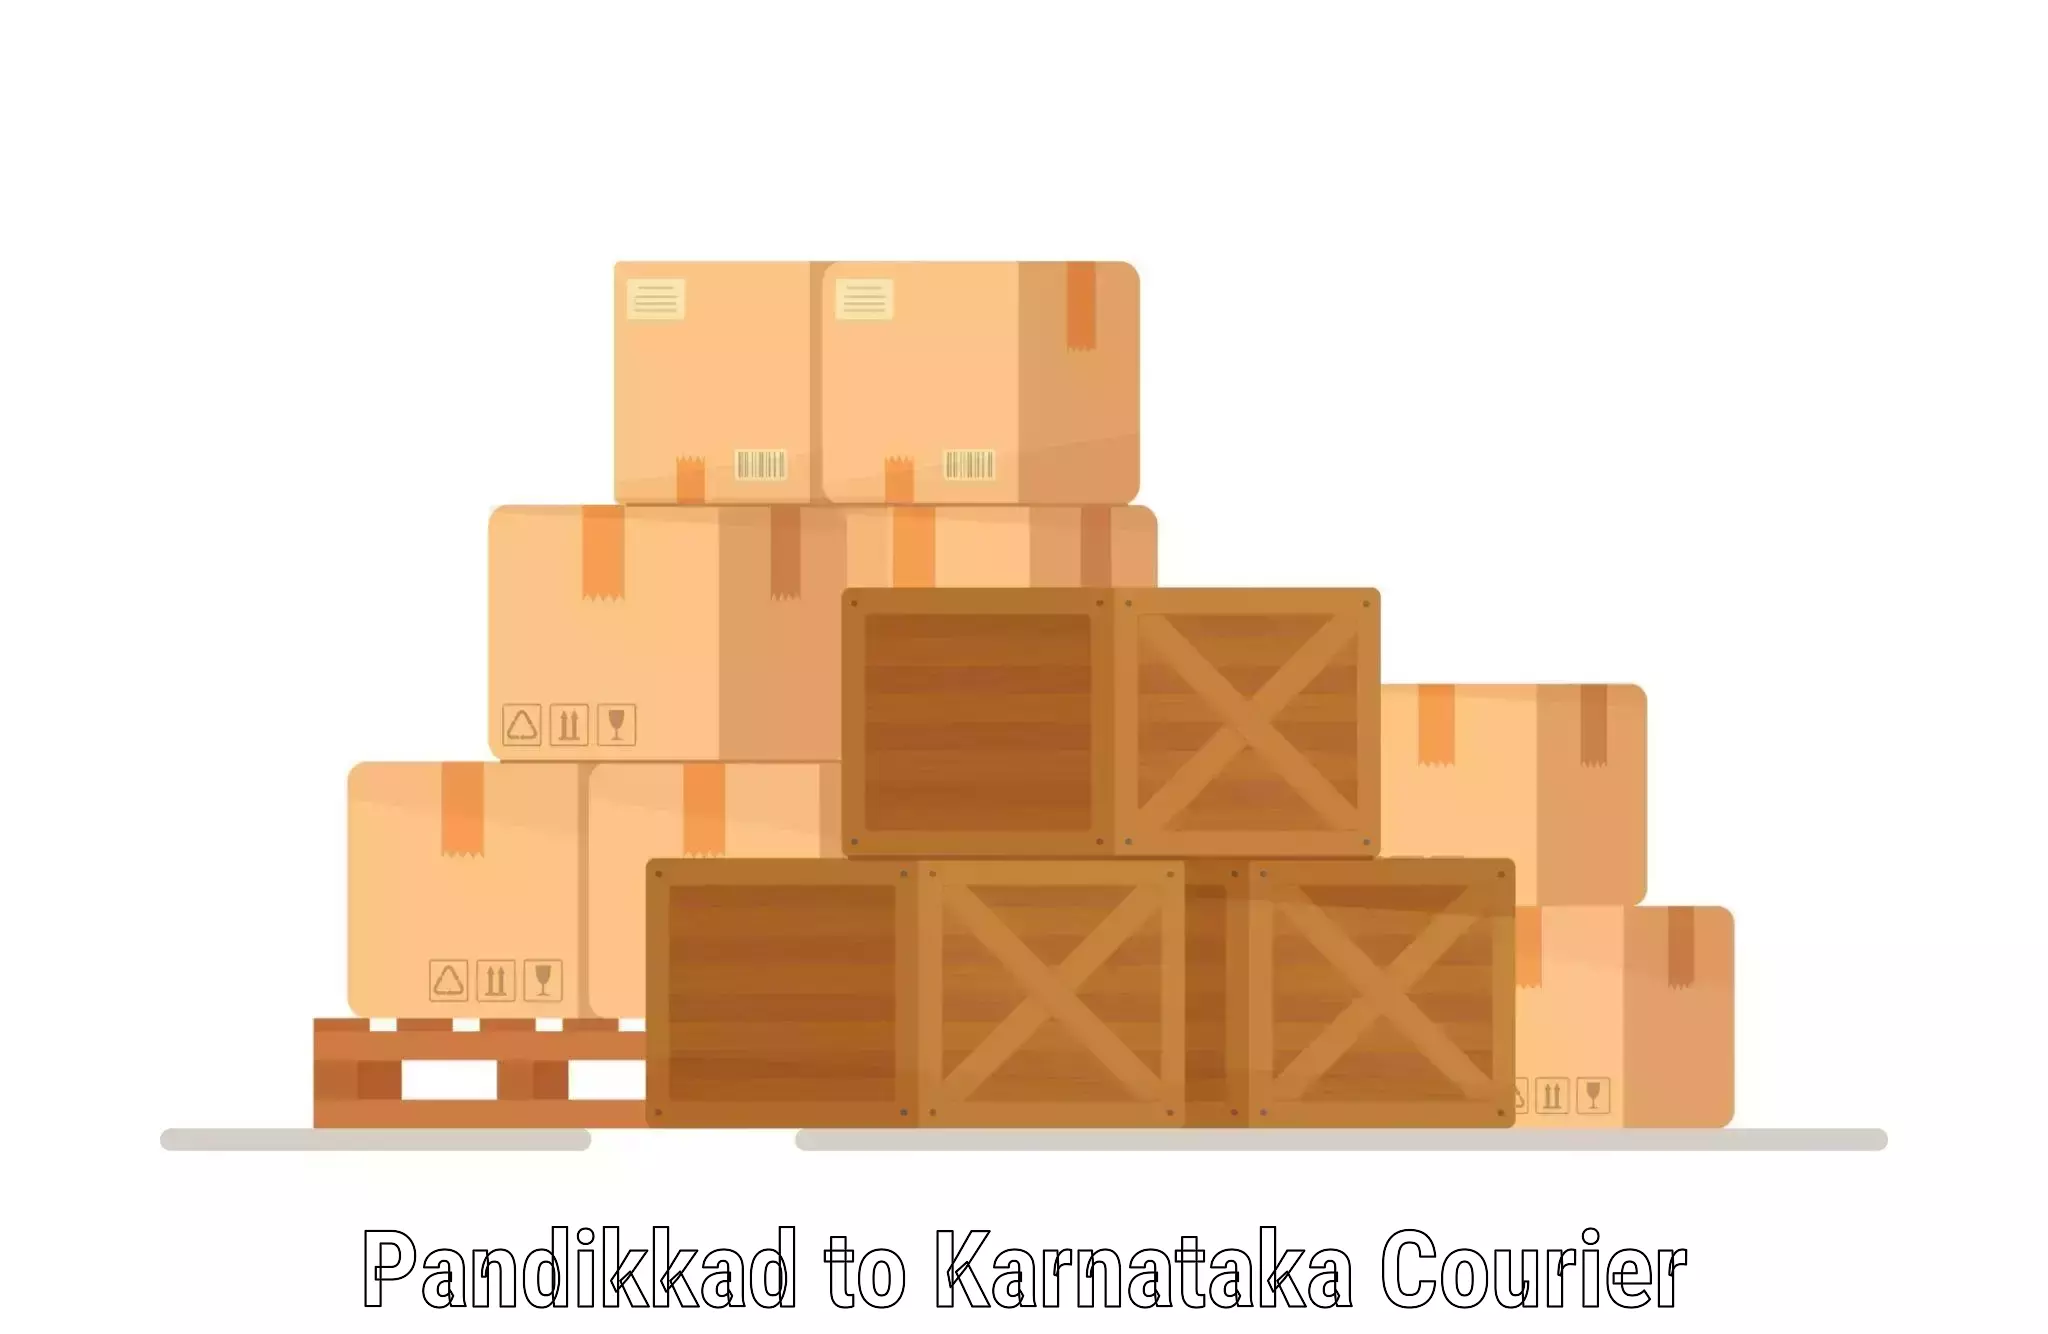 Courier service comparison Pandikkad to Mulbagal